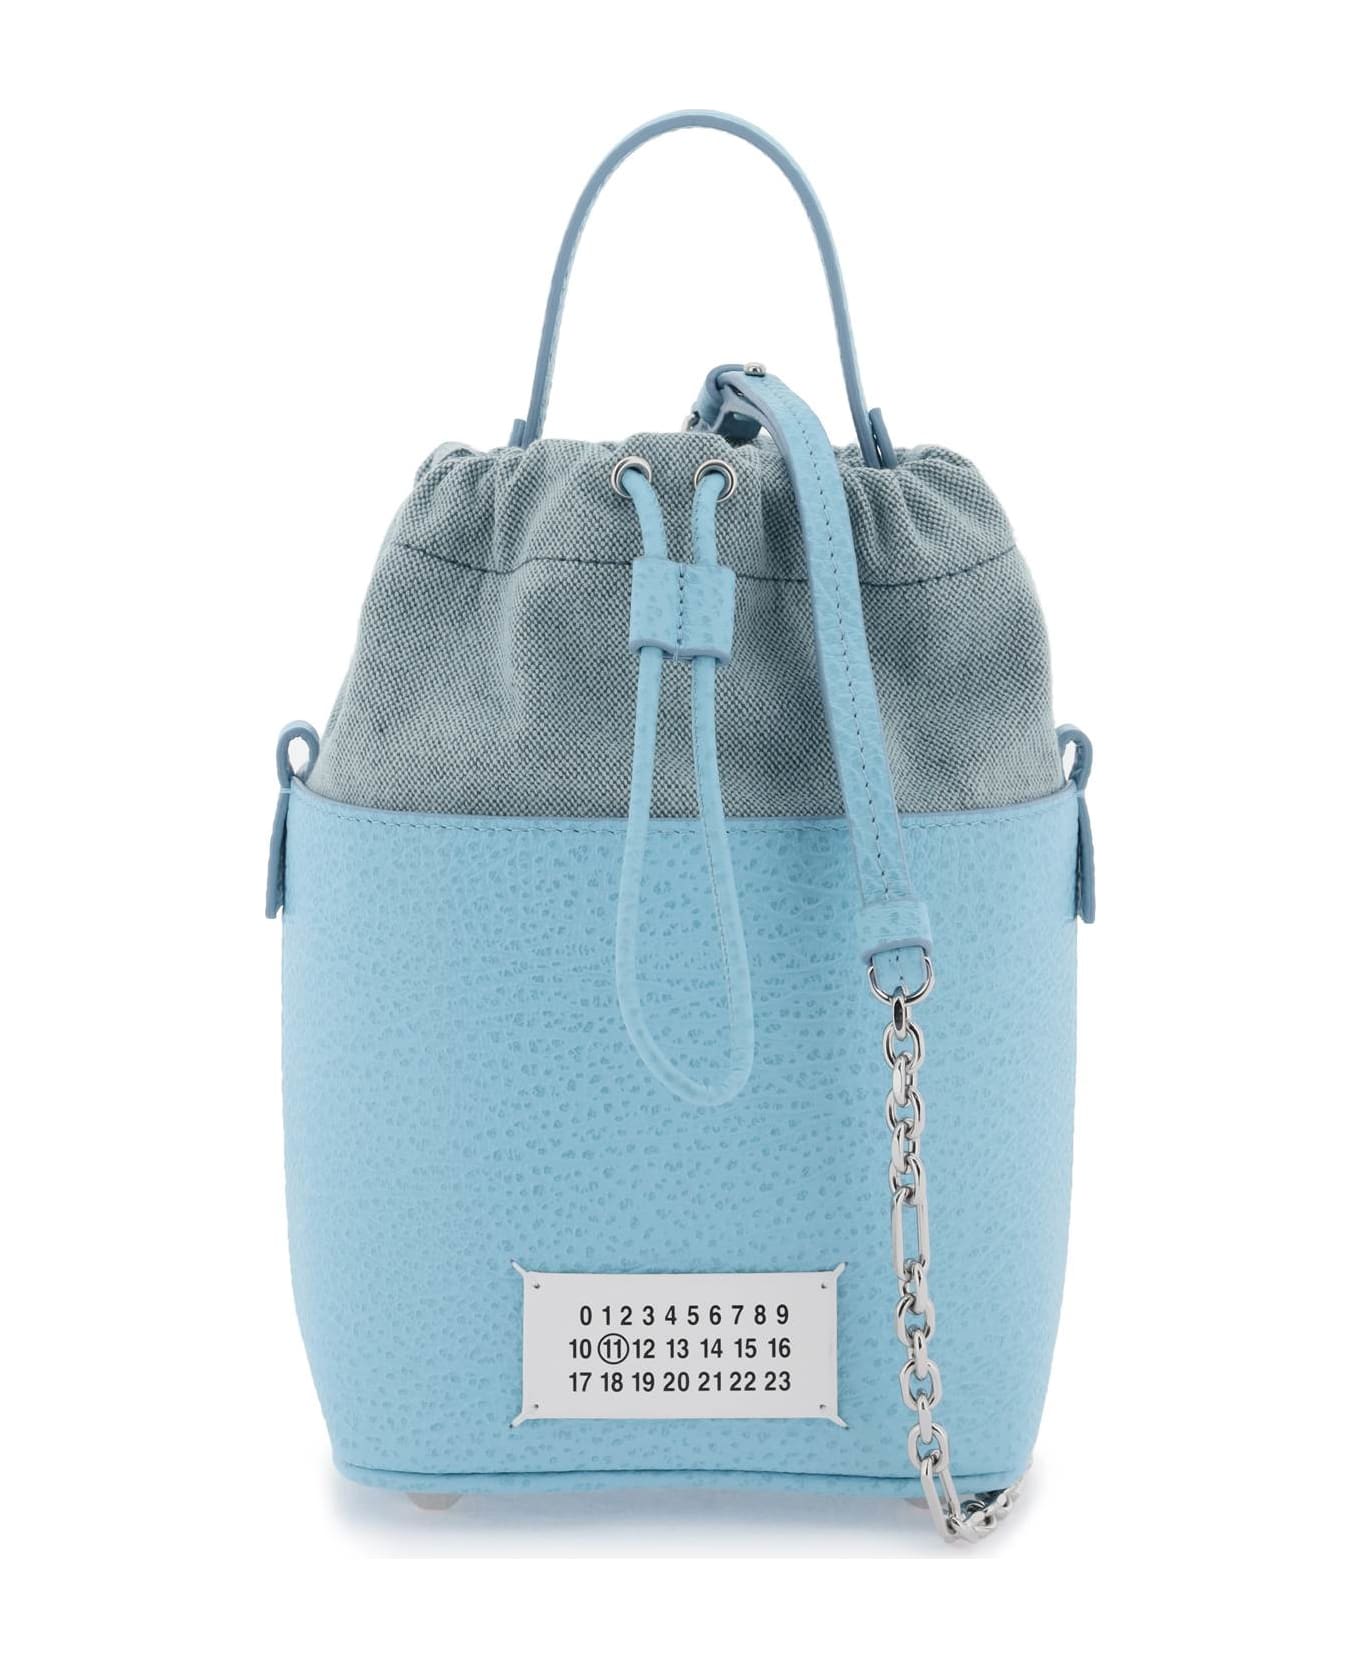 Maison Margiela 5ac Bucket Bag - Light blue